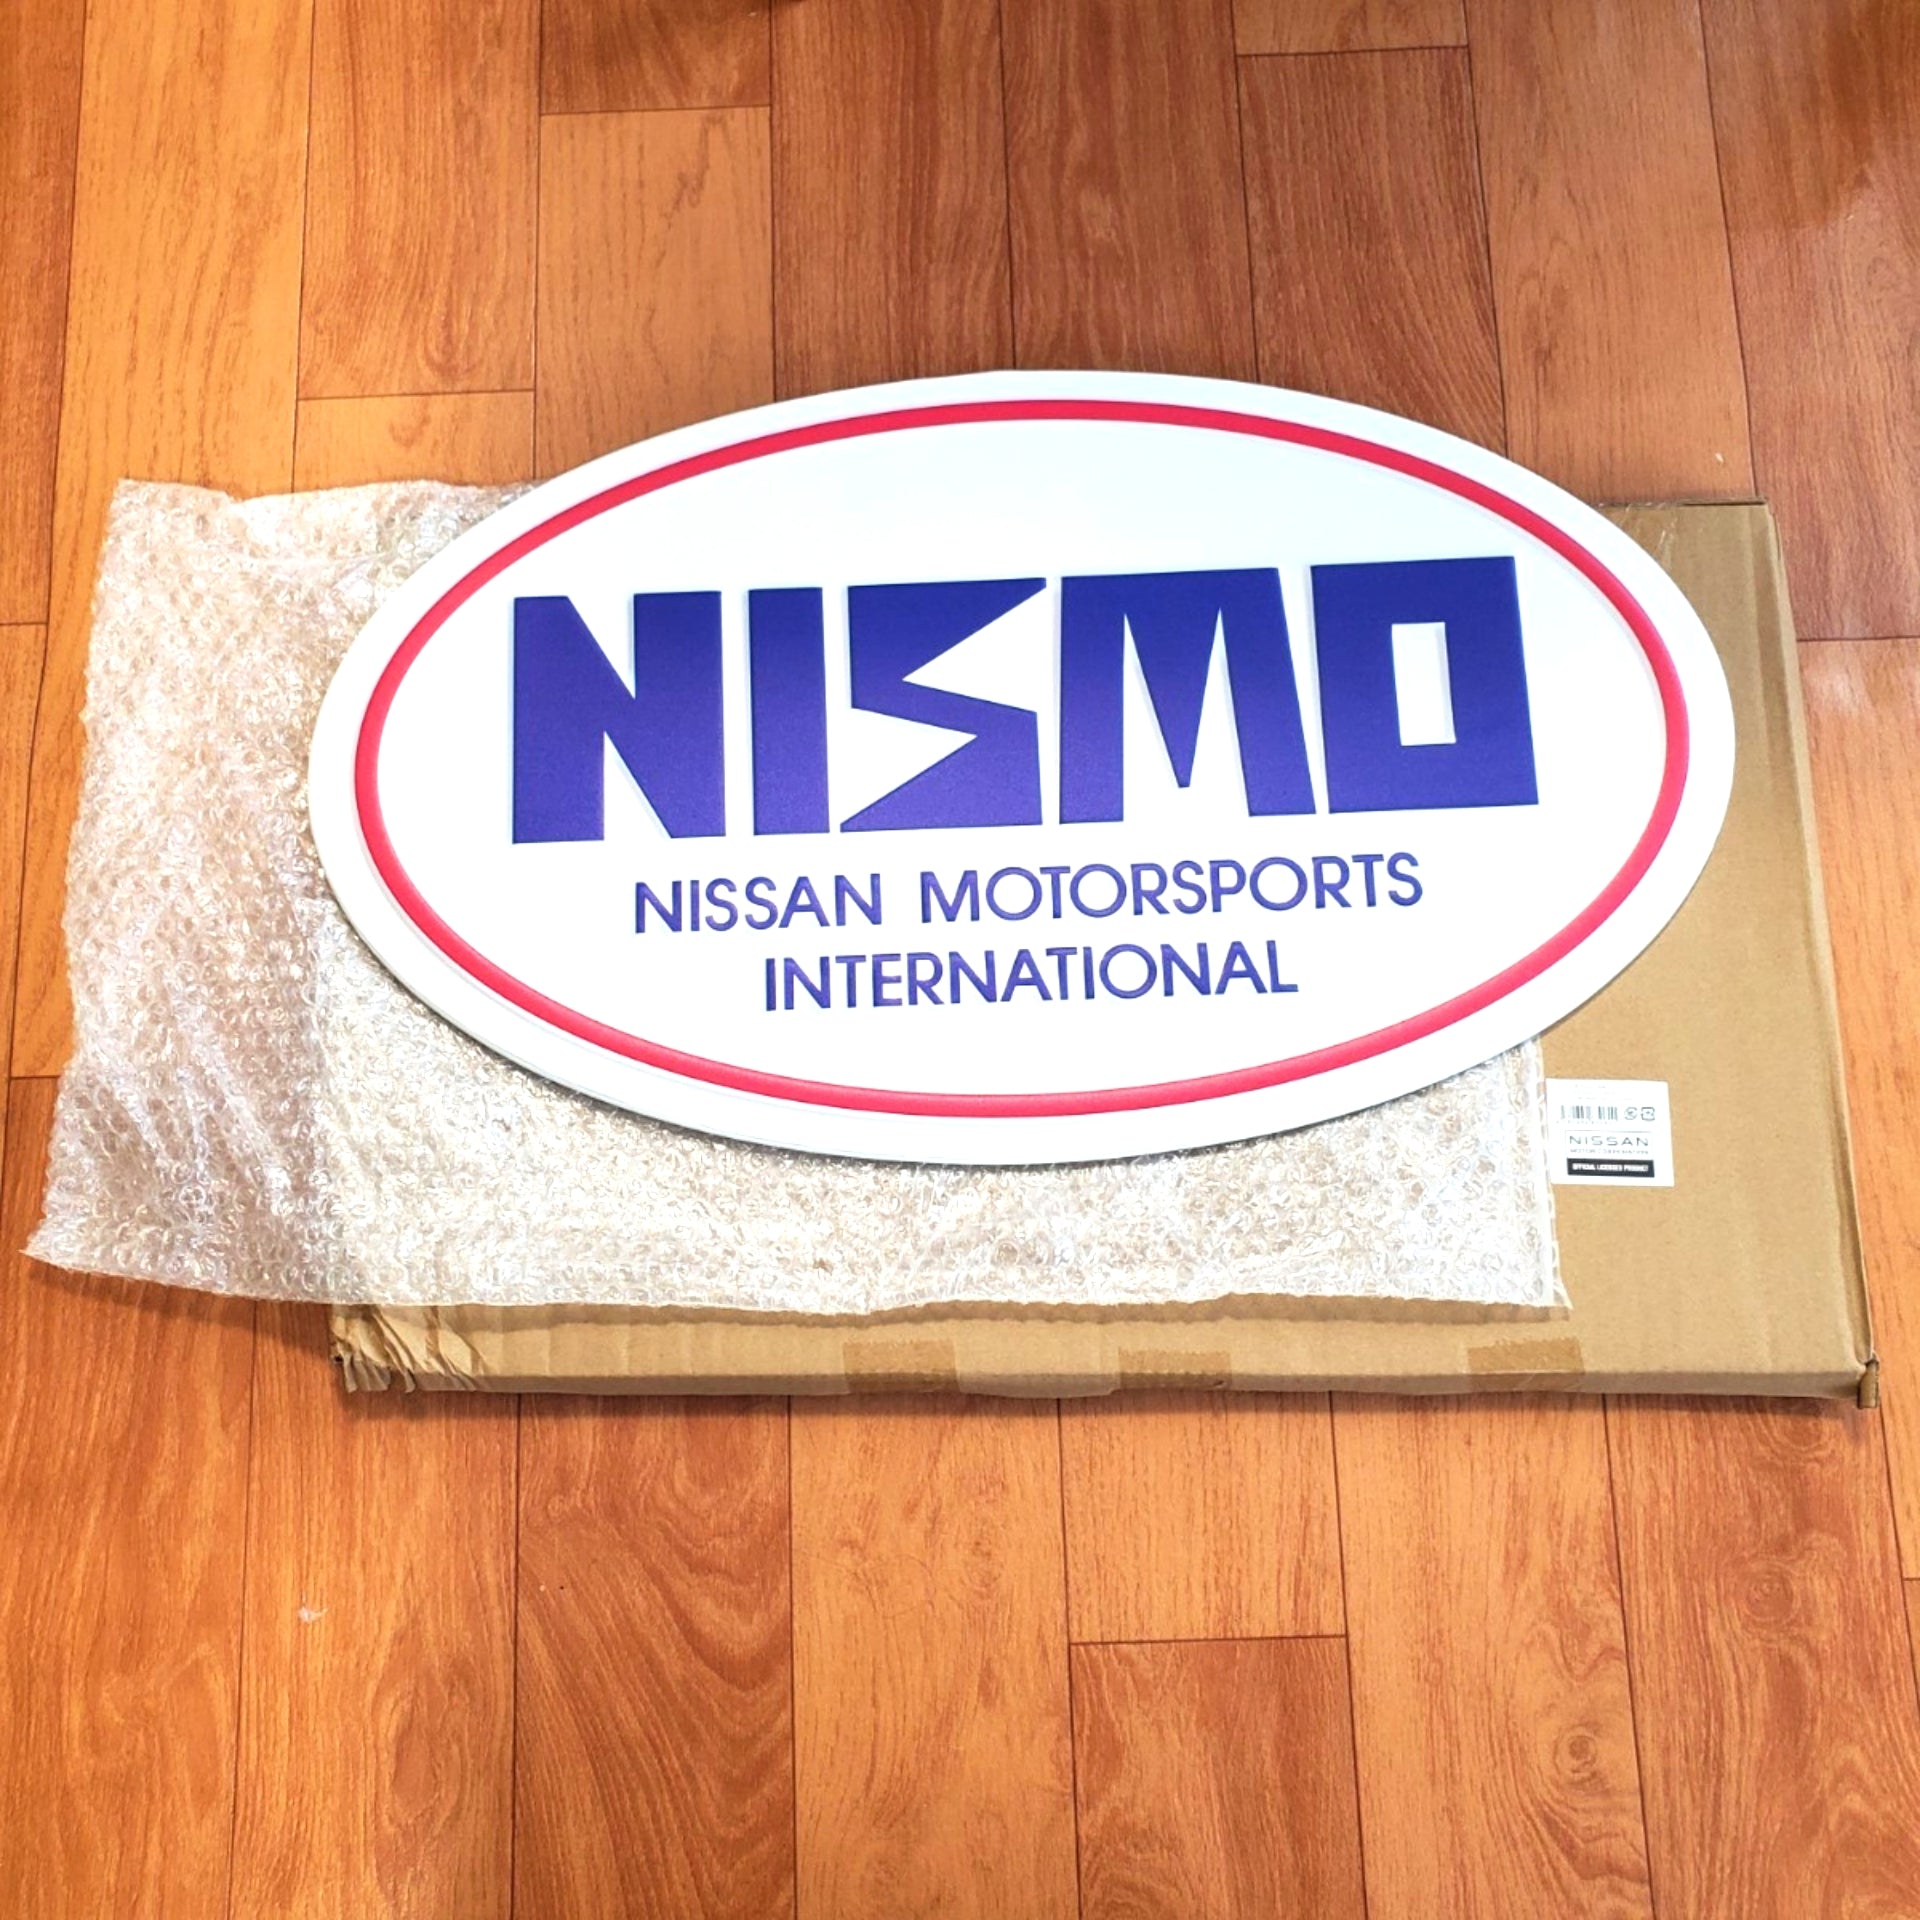 Original NISMO old logo sign